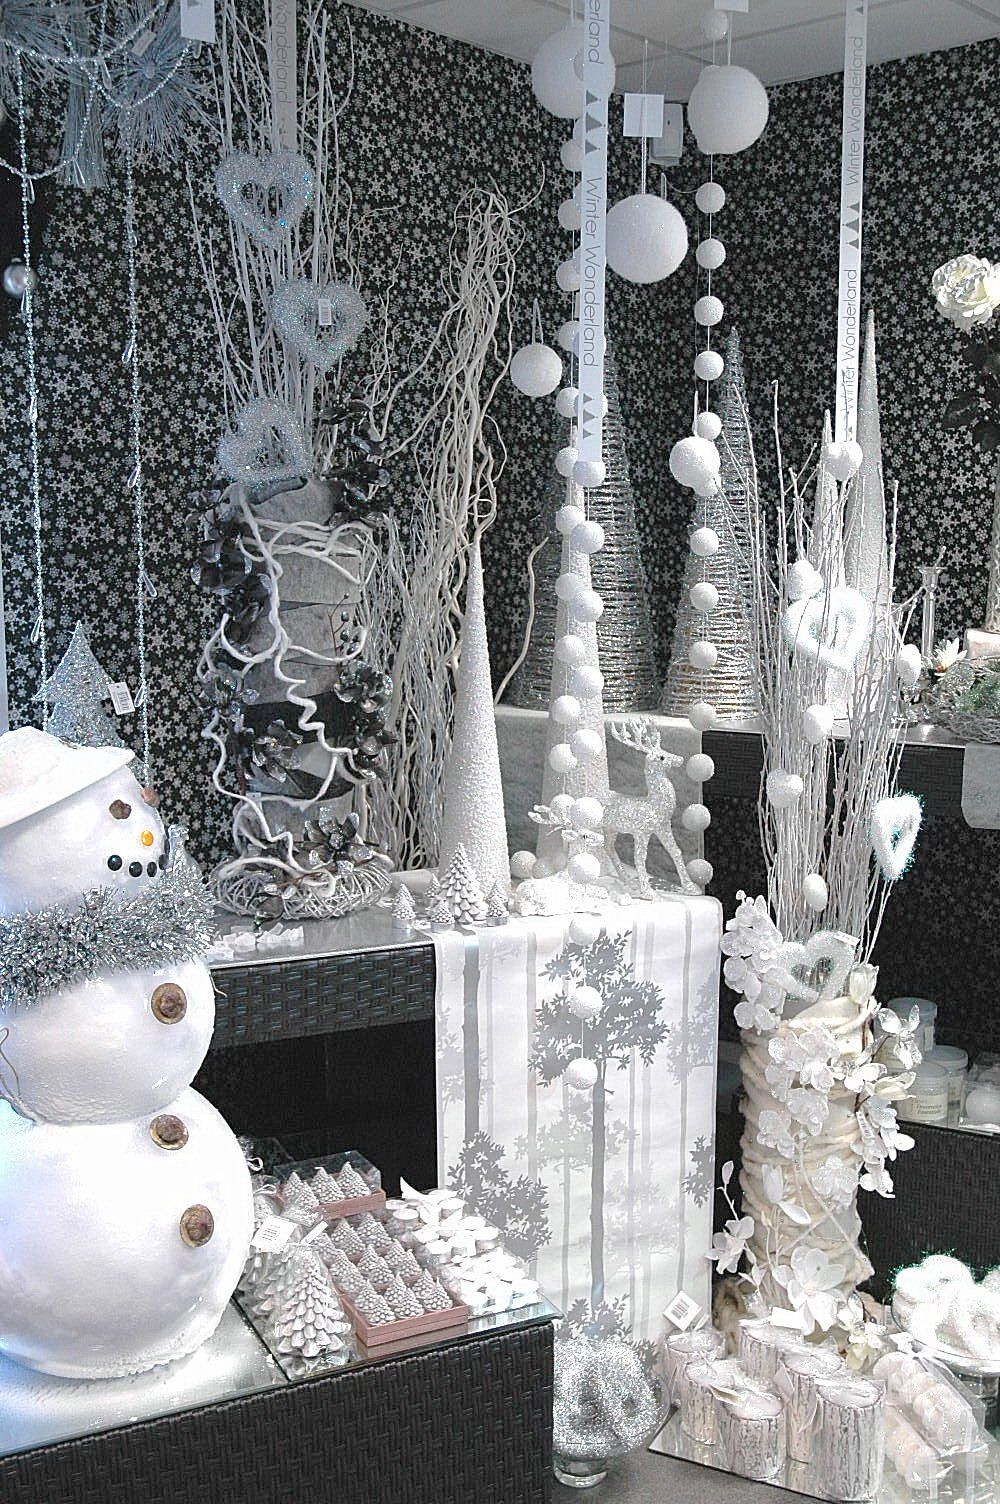 Christmas Winter Wonderland Decorating Ideas
 A Winter Wonderland display similar to elf and white